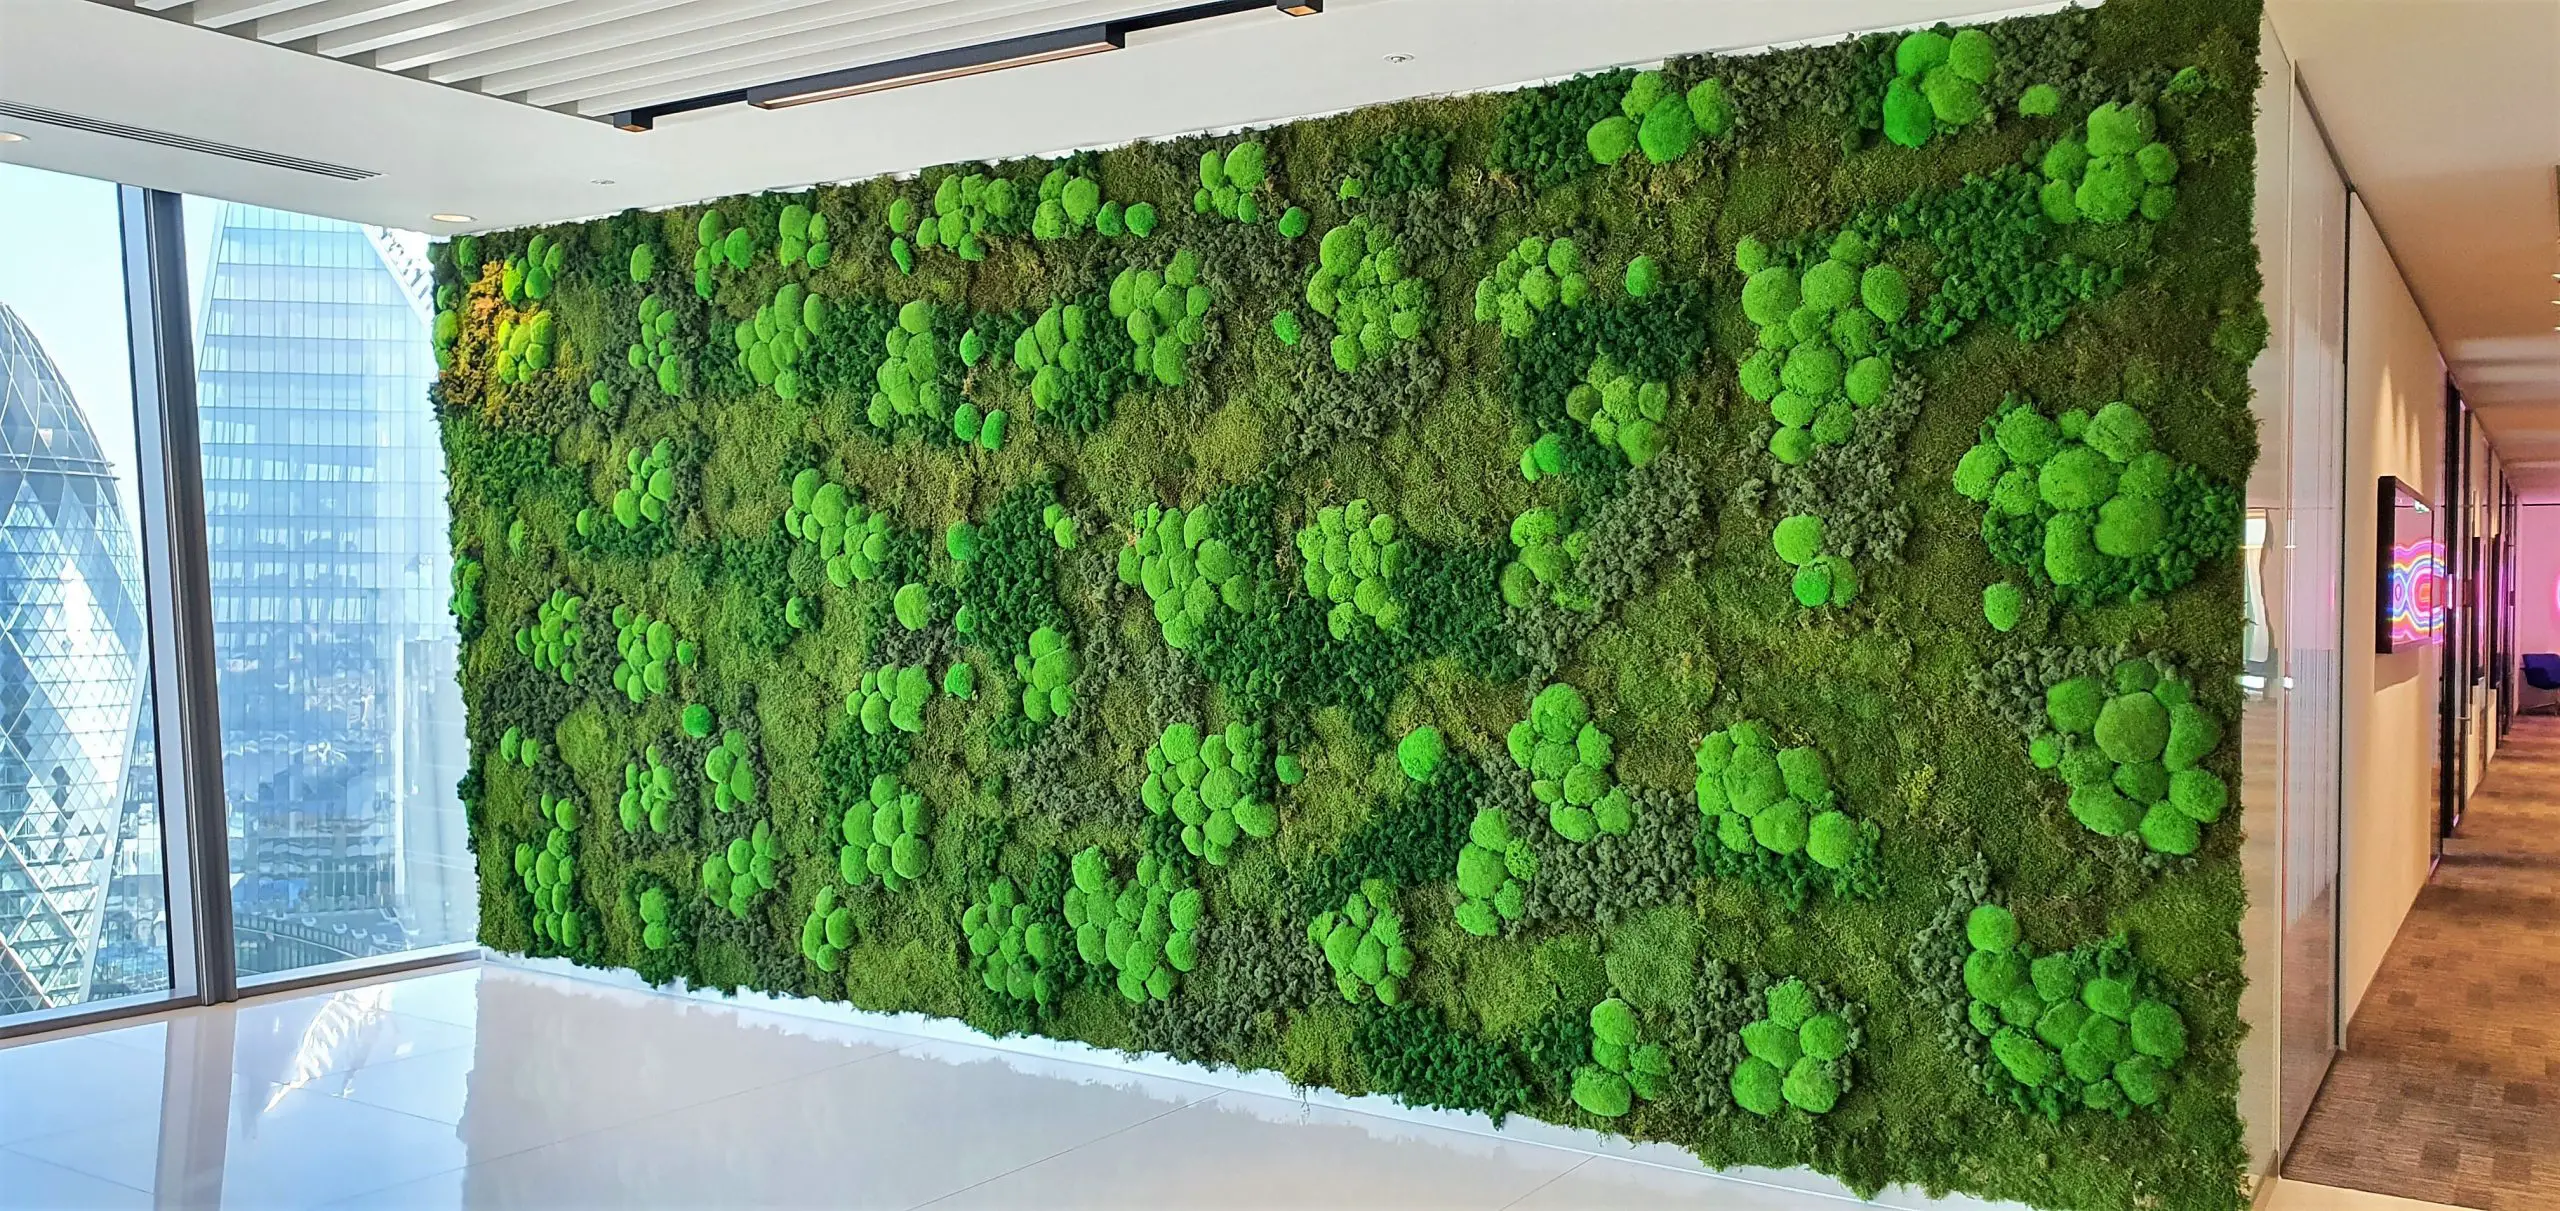 Indoor Moss Wall Vs. Outdoor Moss Wall